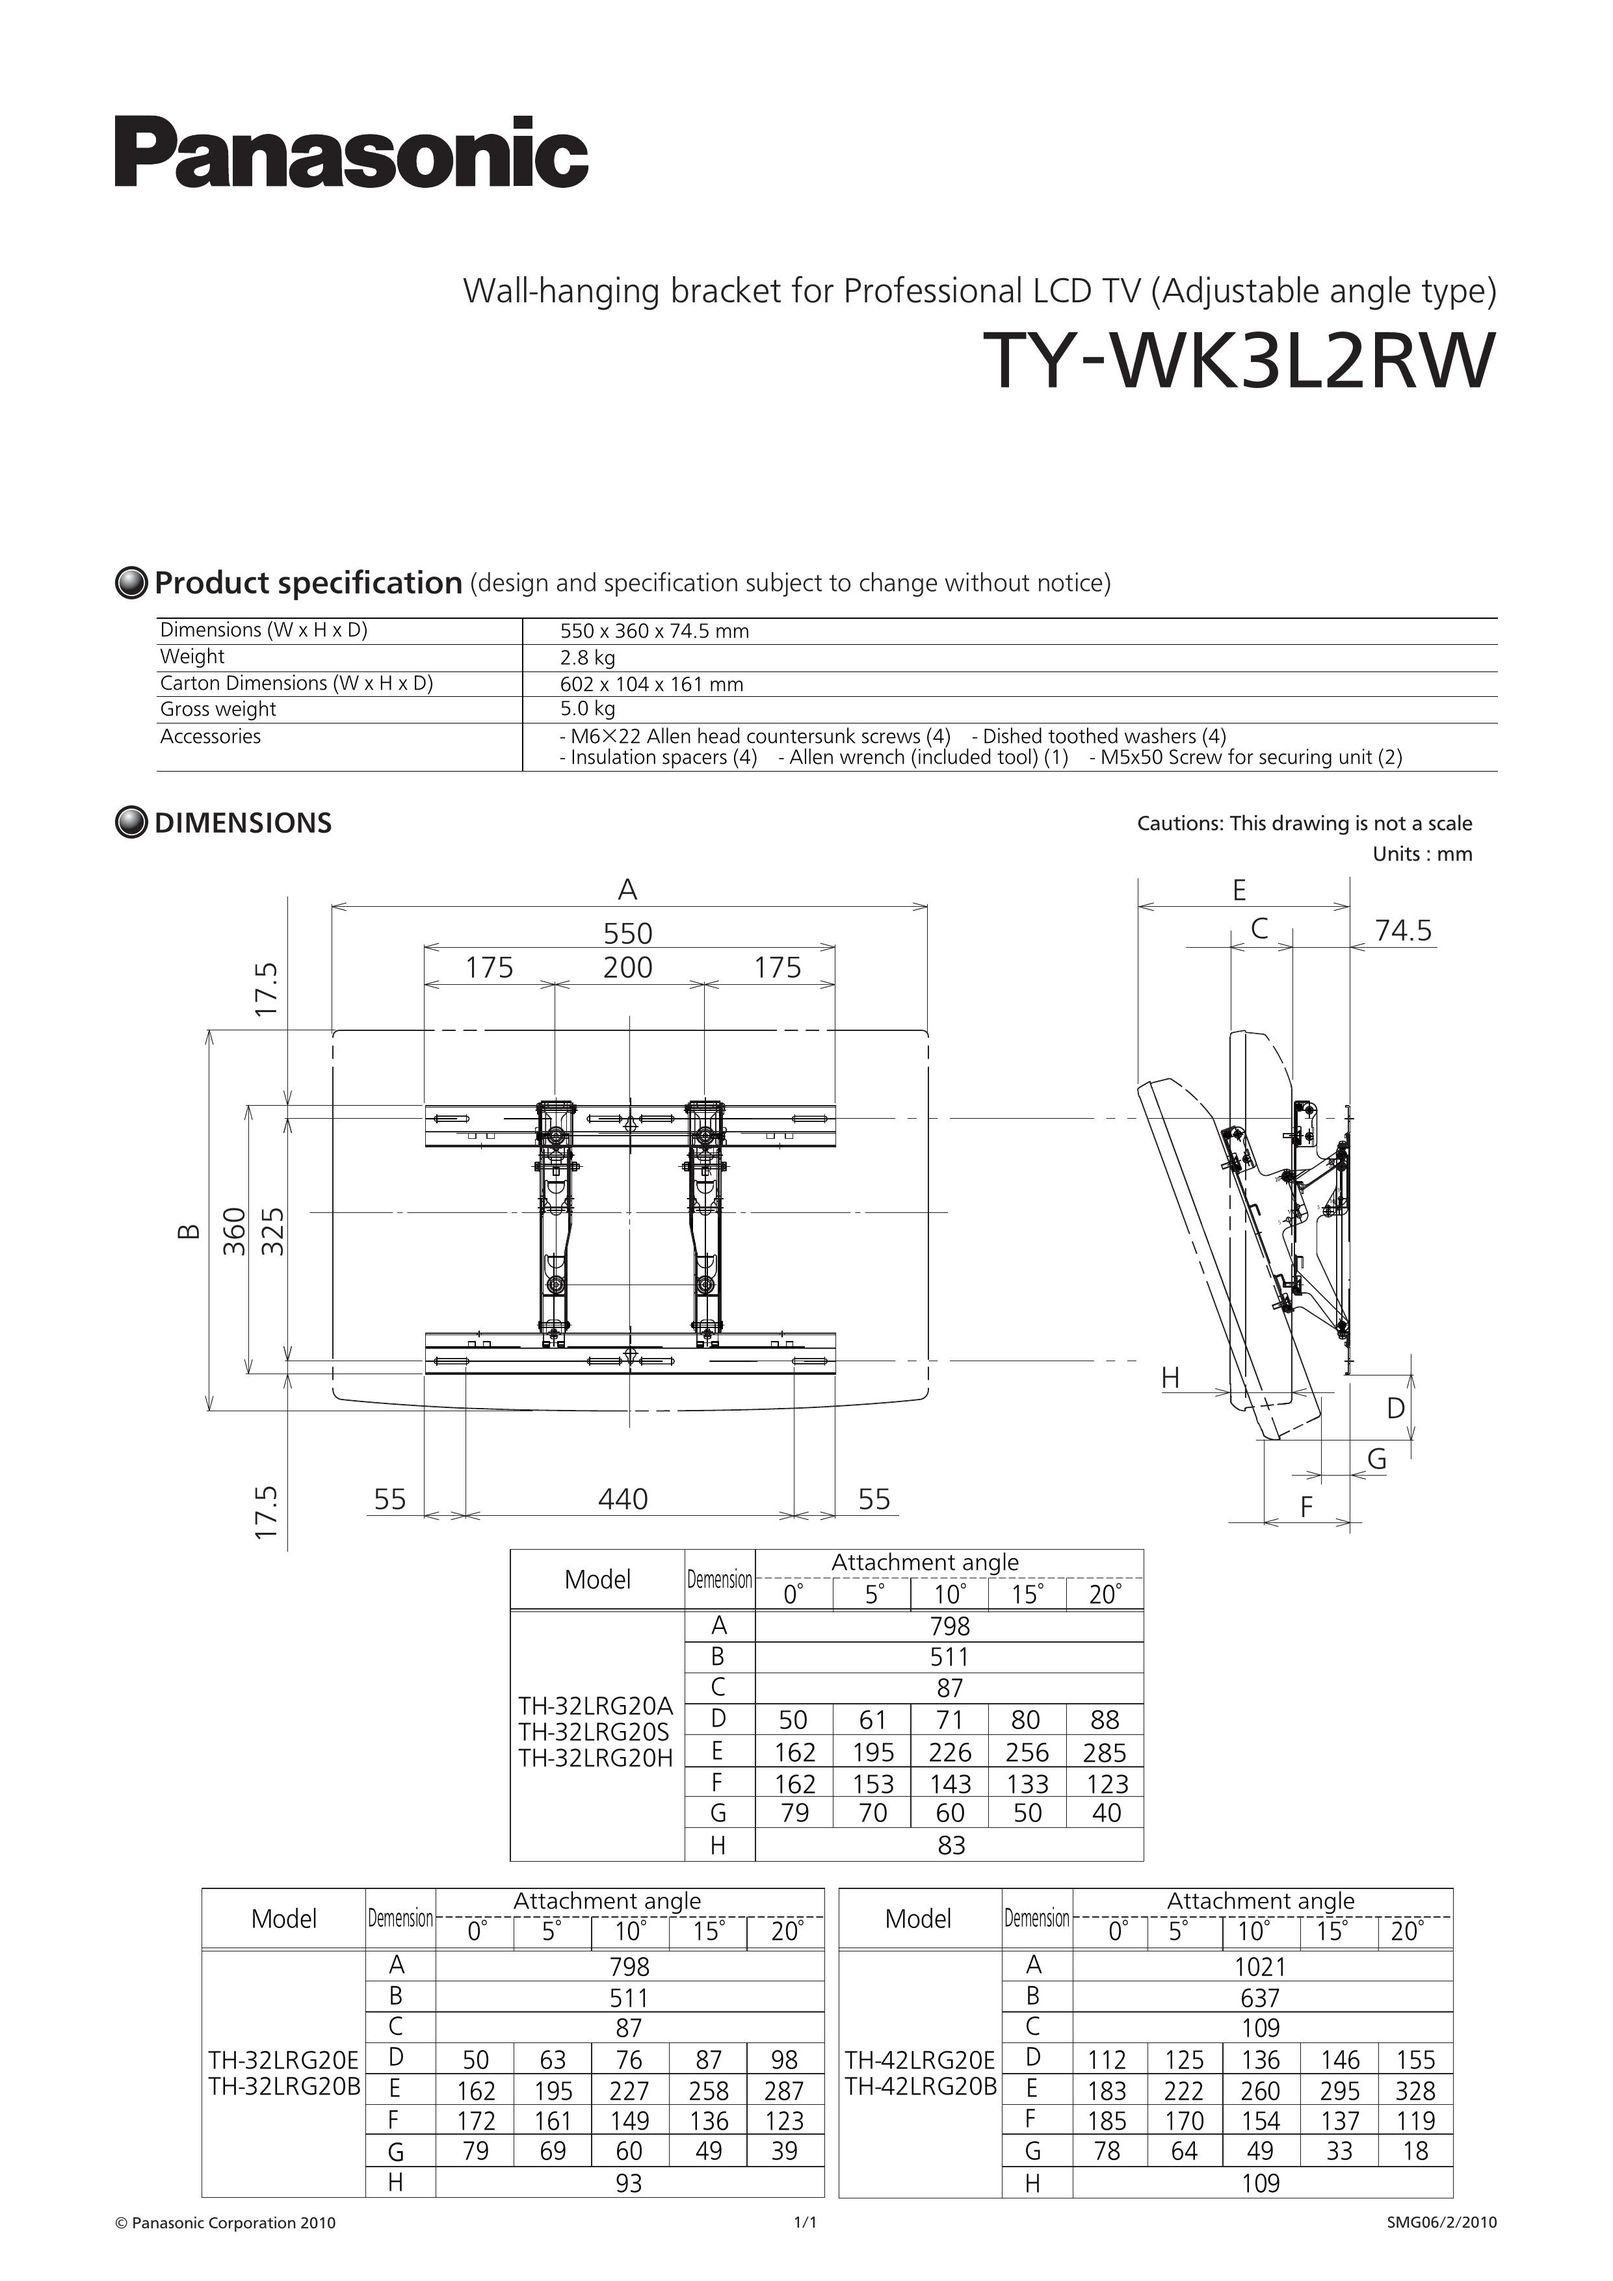 Panasonic TYWK3L2RW TV Mount User Manual